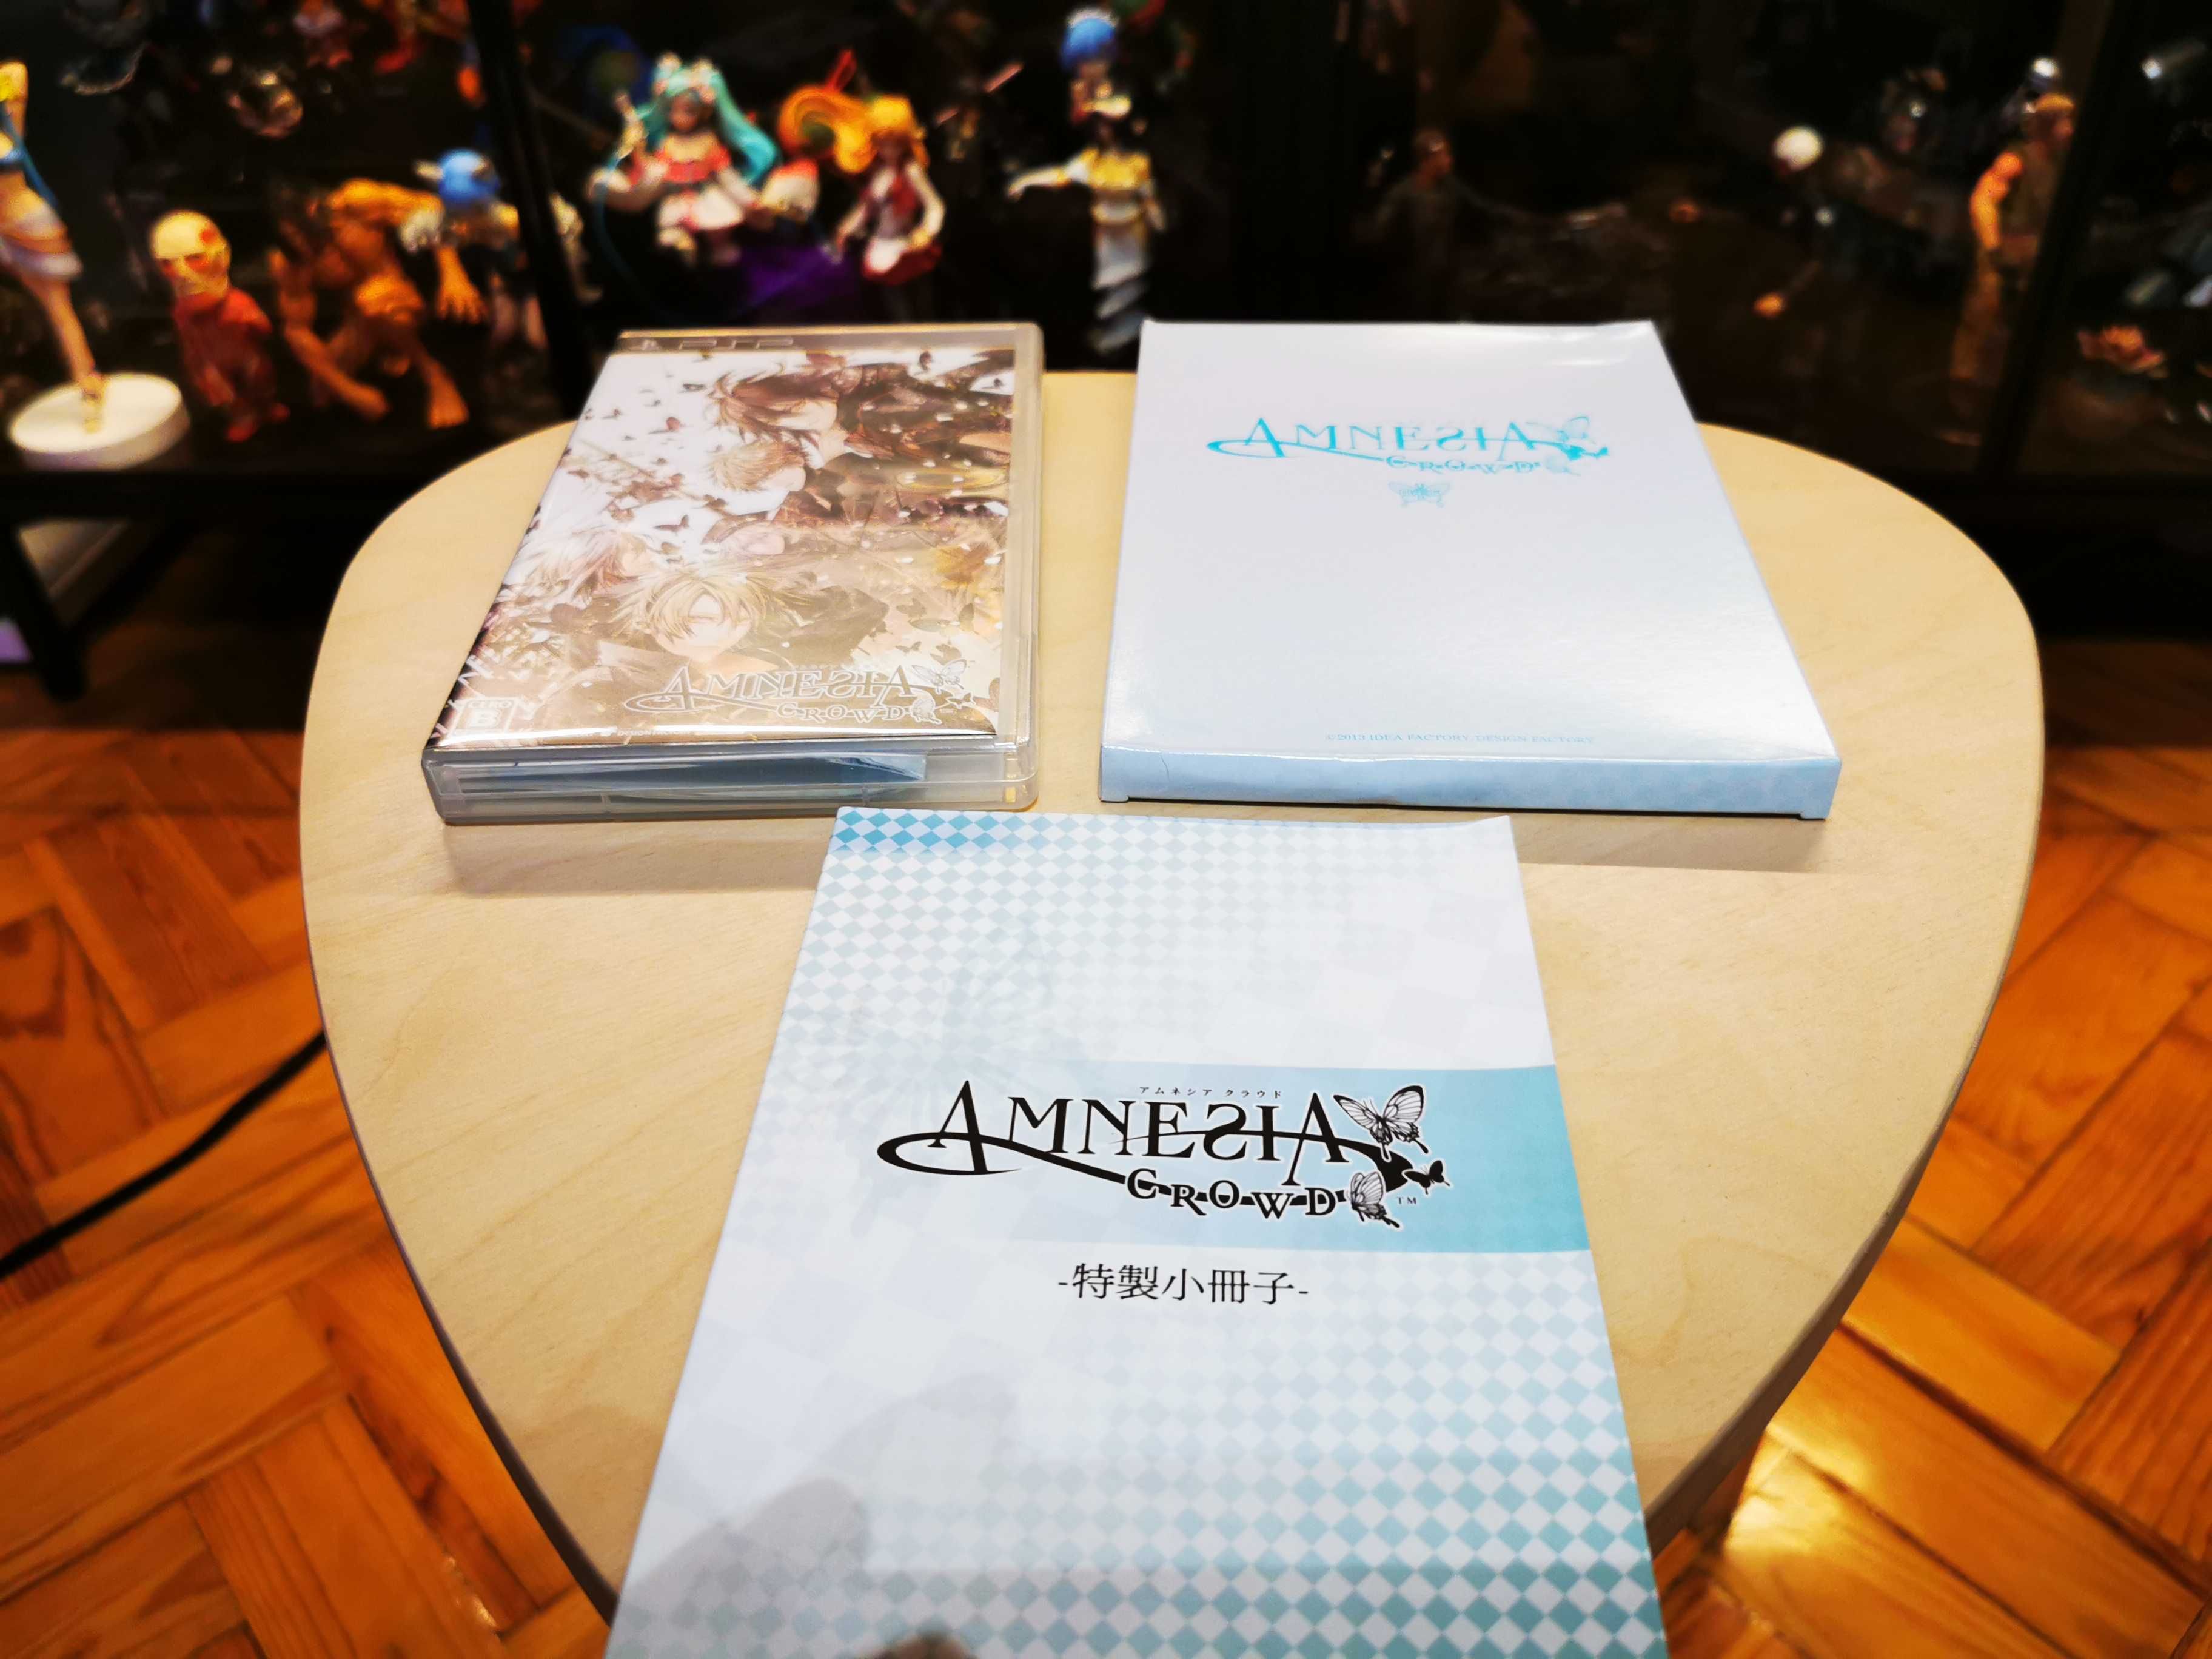 Amnesia Crowd Limited Edition PlayStation Portable